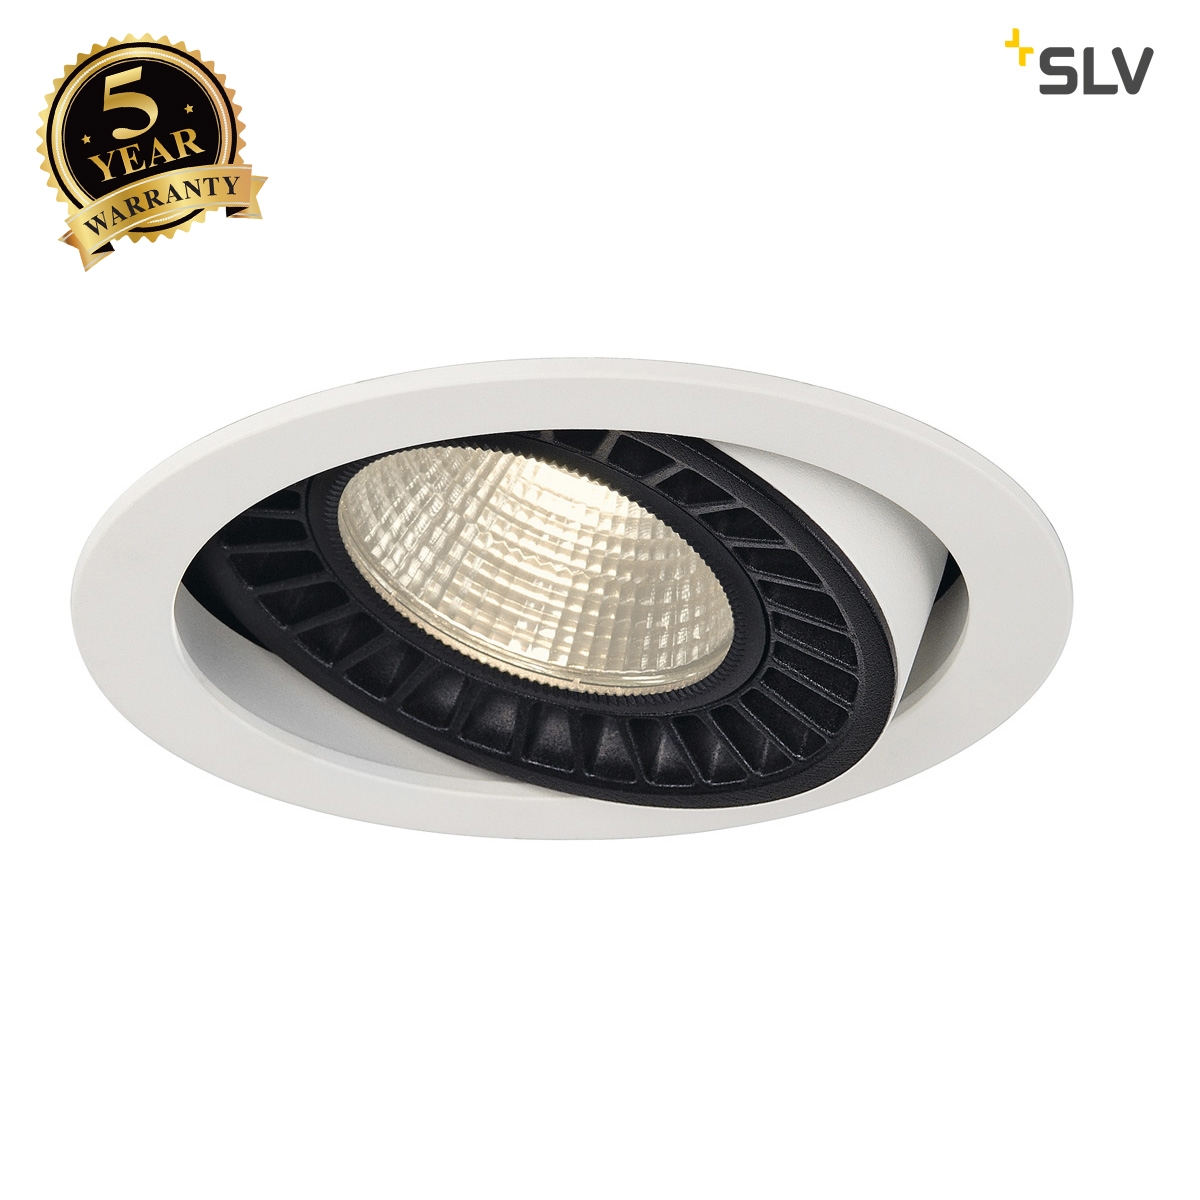 SLV SUPROS DL recessed ceiling light, round, white, 3000K SLM LED, 60° reflector 114111